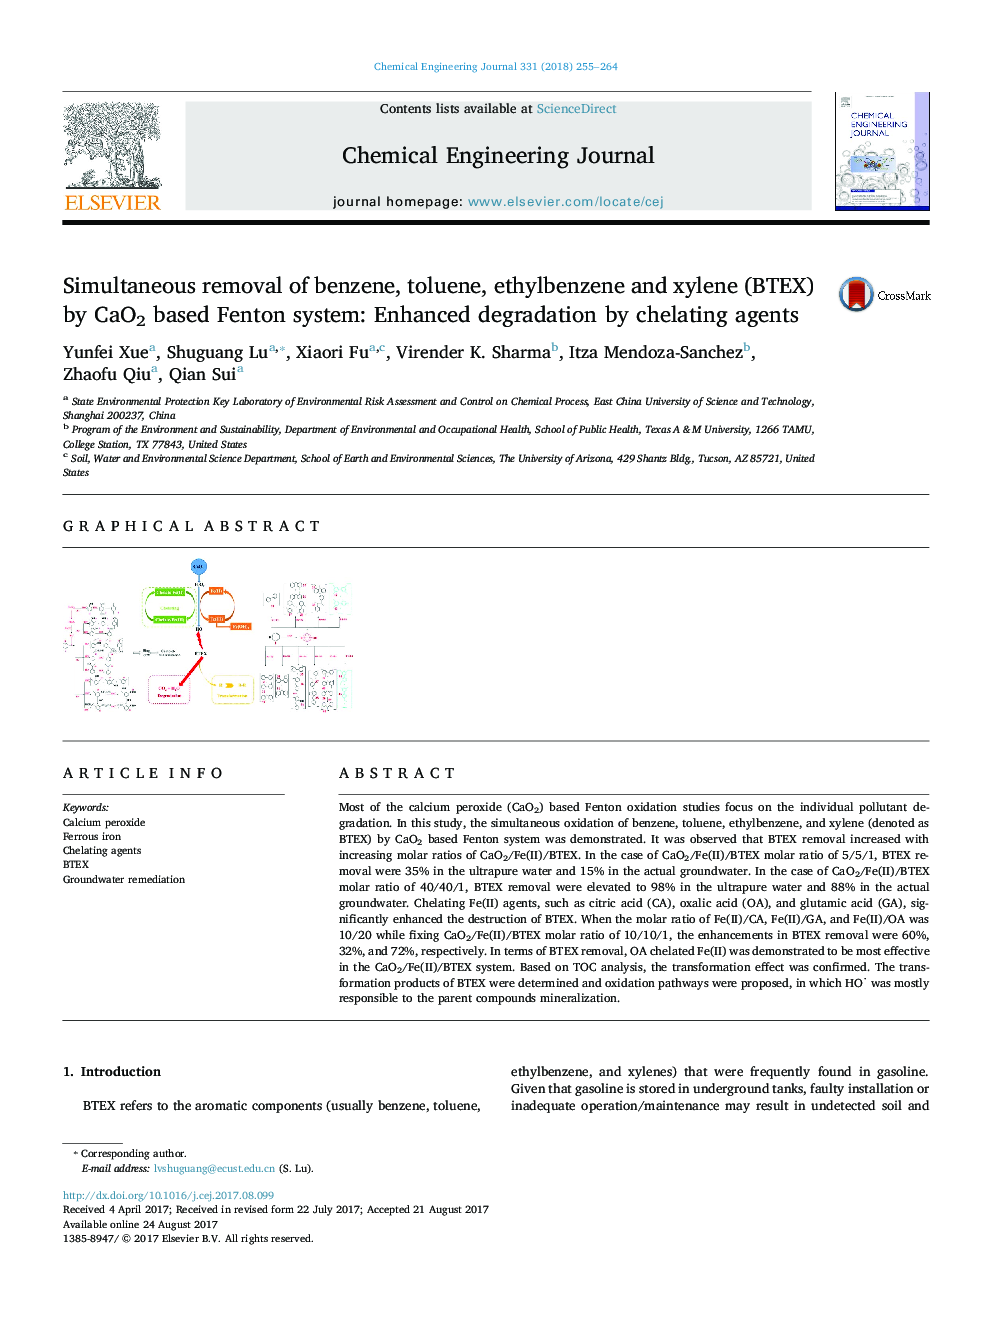 Simultaneous removal of benzene, toluene, ethylbenzene and xylene (BTEX) by CaO2 based Fenton system: Enhanced degradation by chelating agents